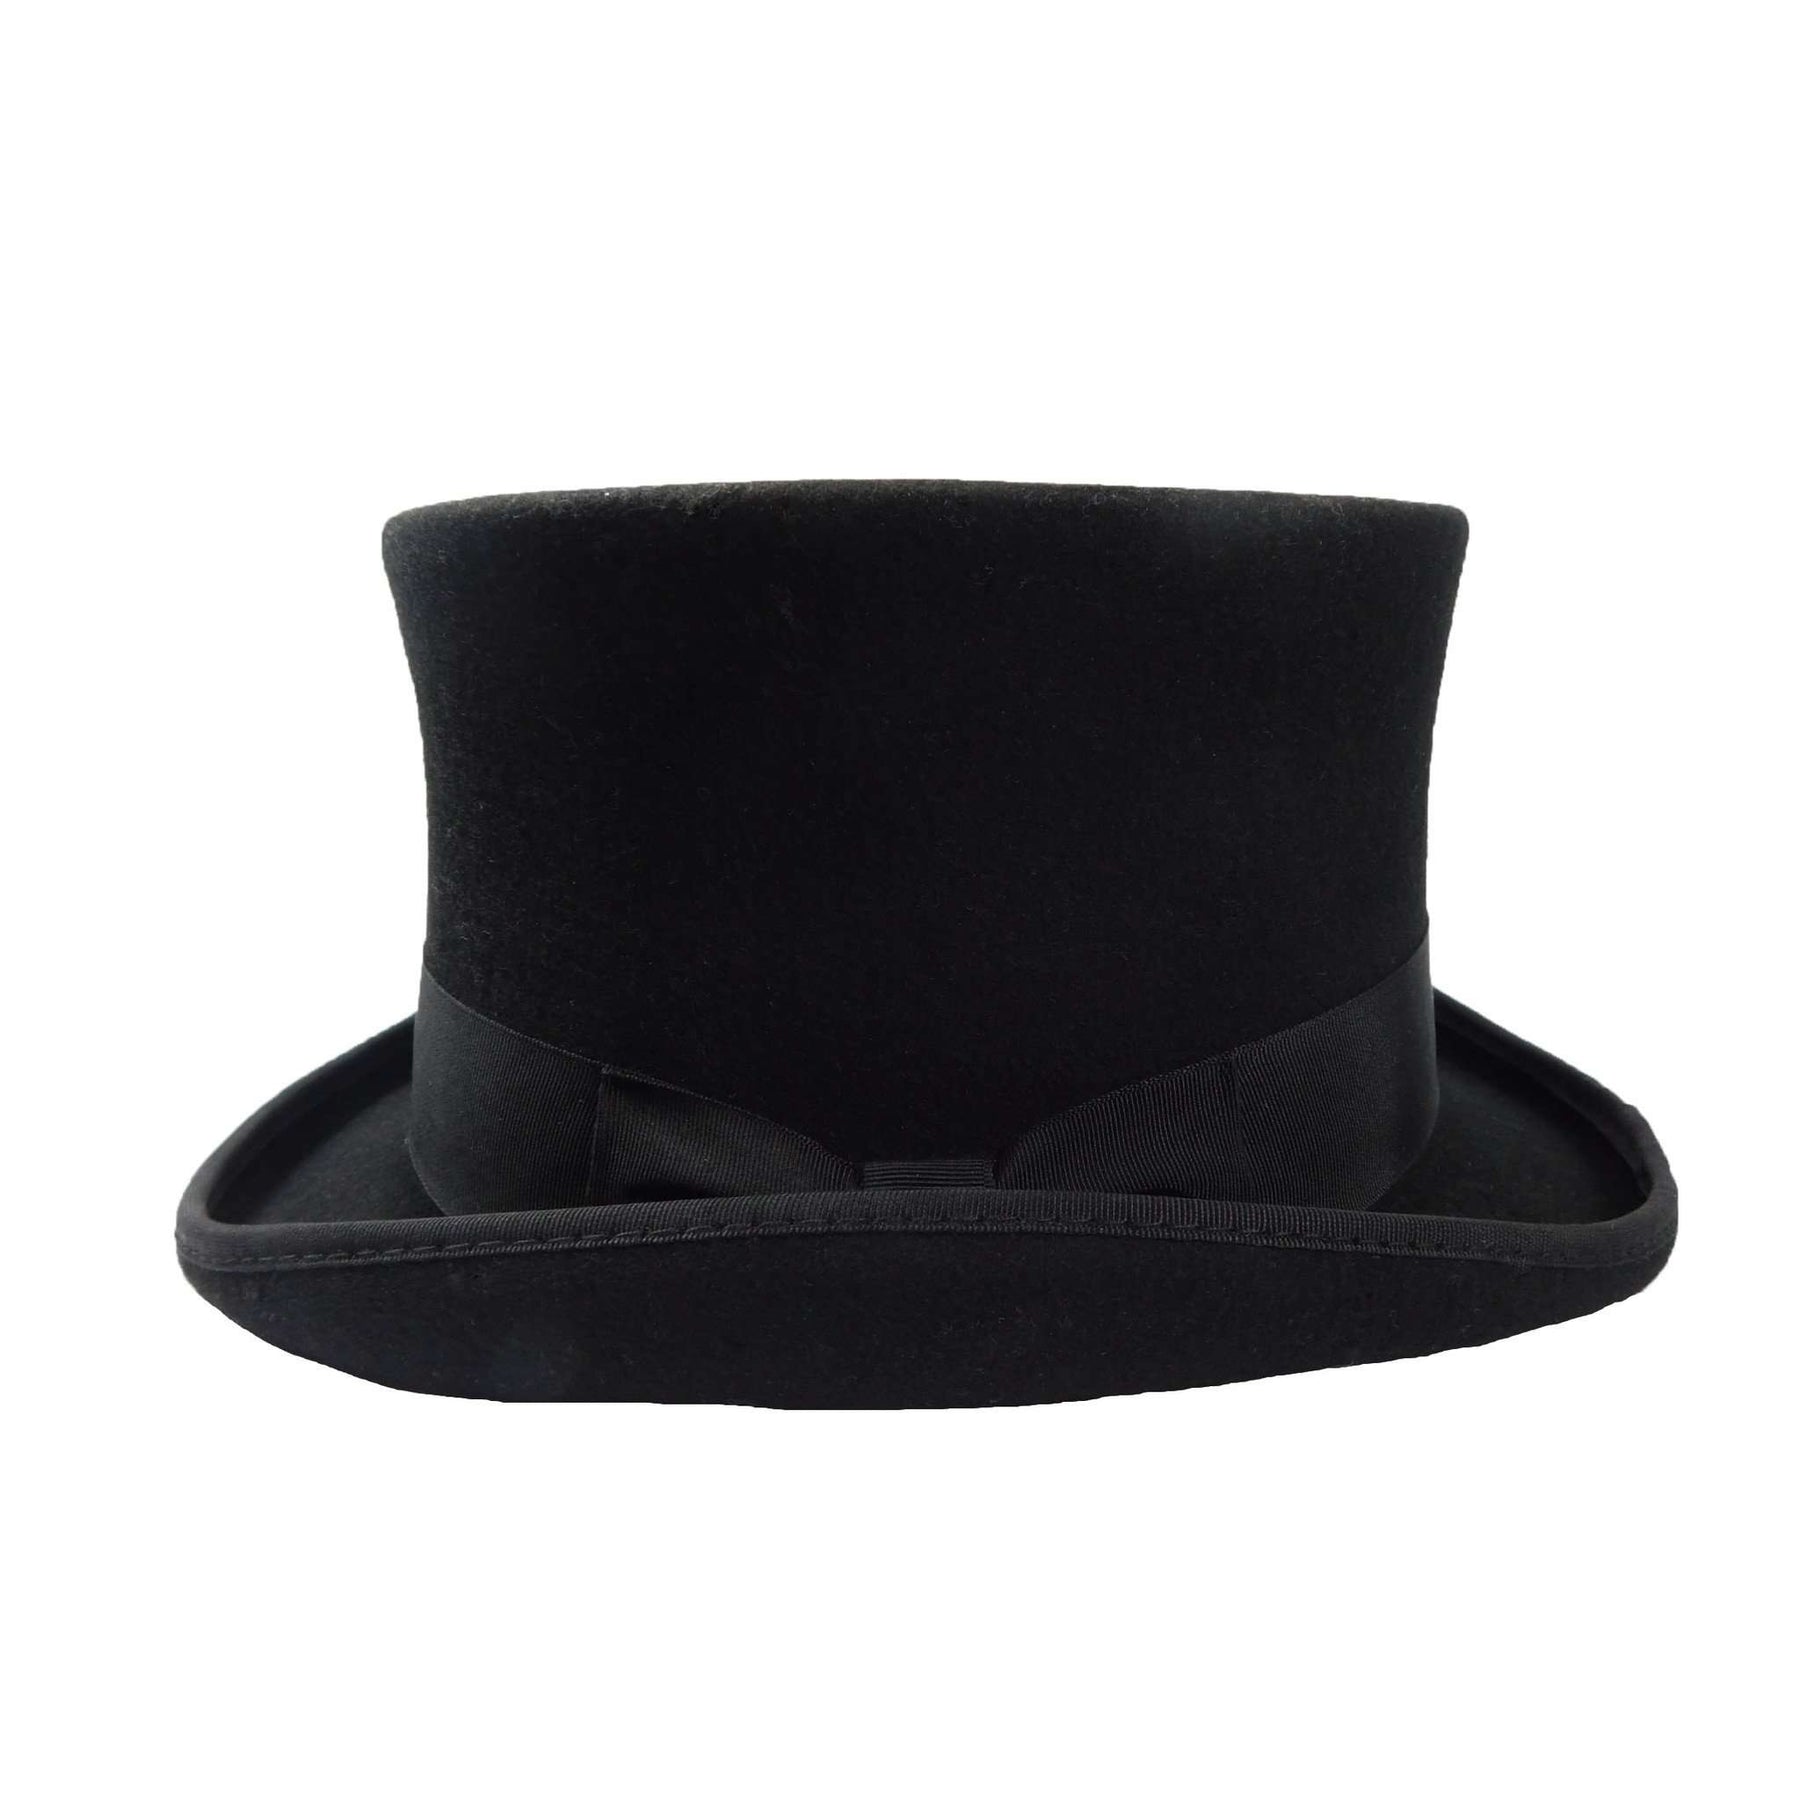 Hat Dictionary Description Of Historical Hat Styles Setartrading Hats